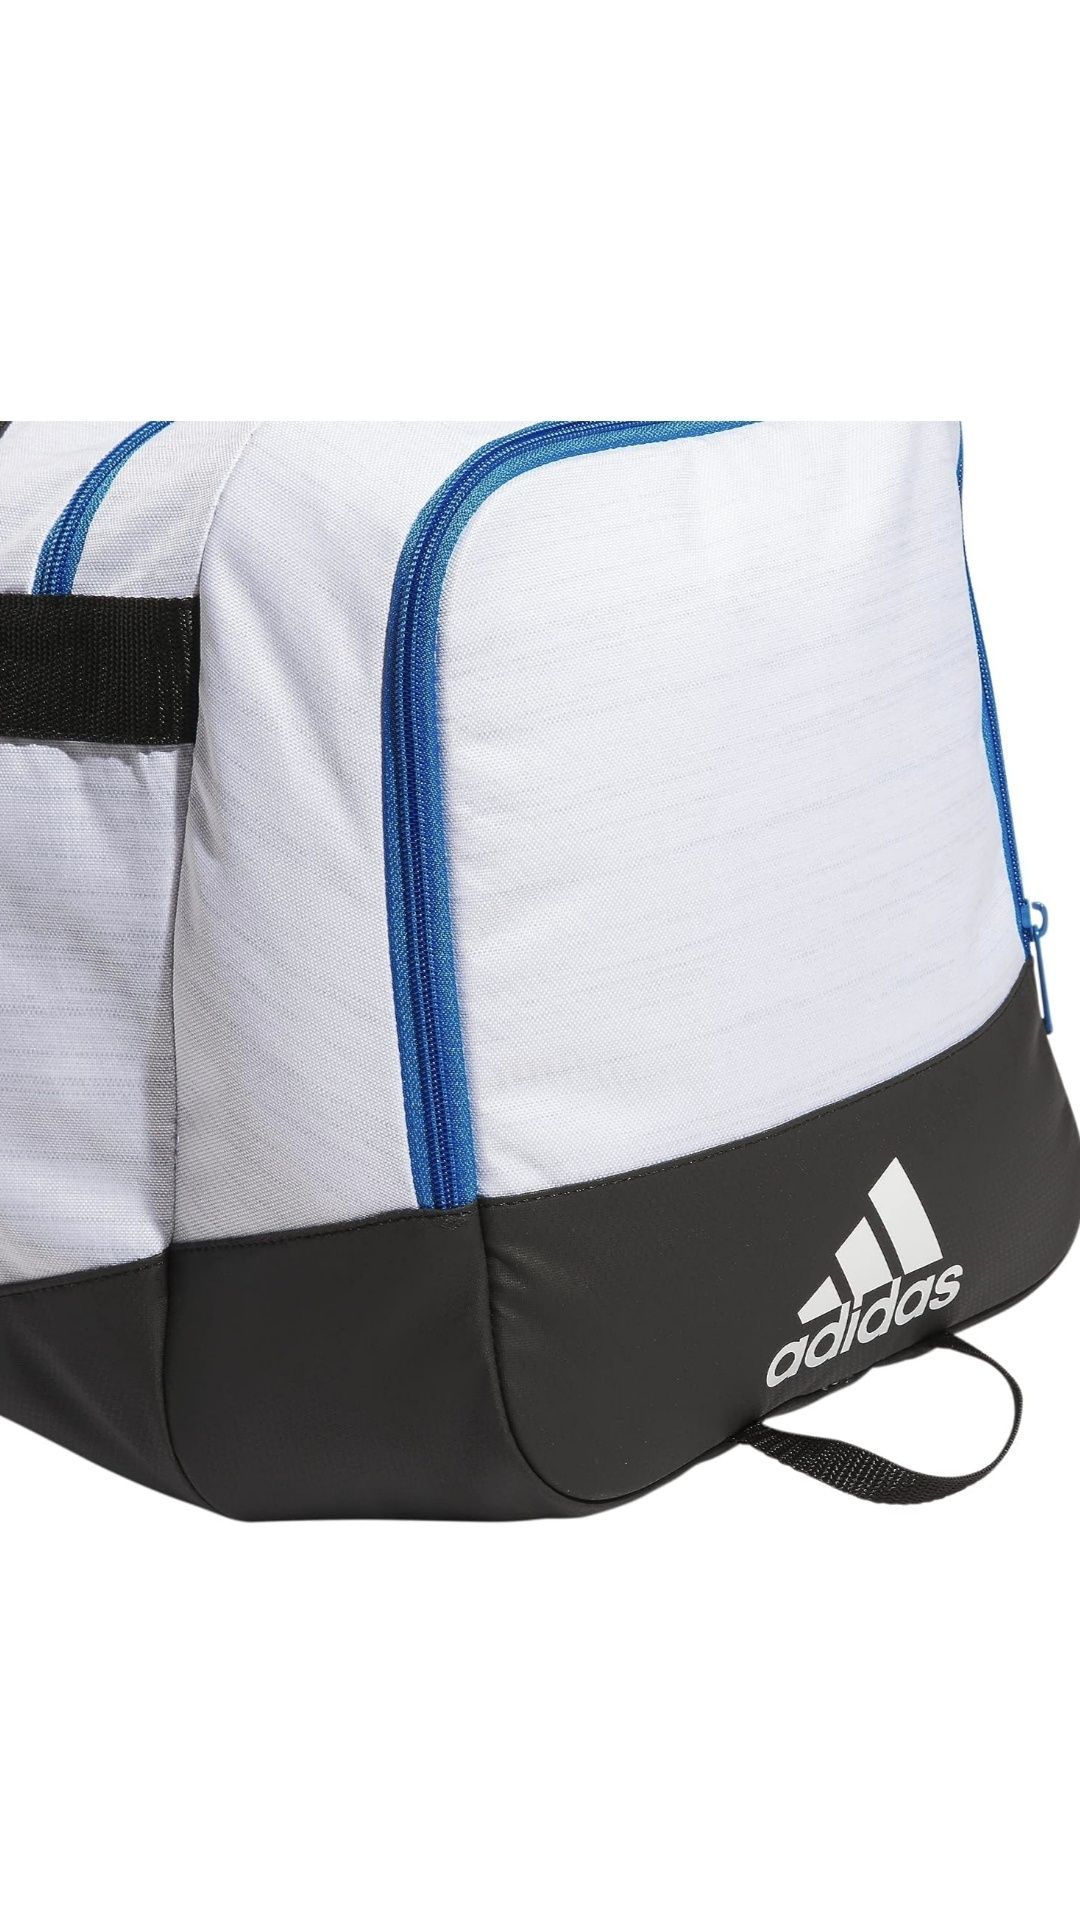 Adidas Defender 4 Medium сумка